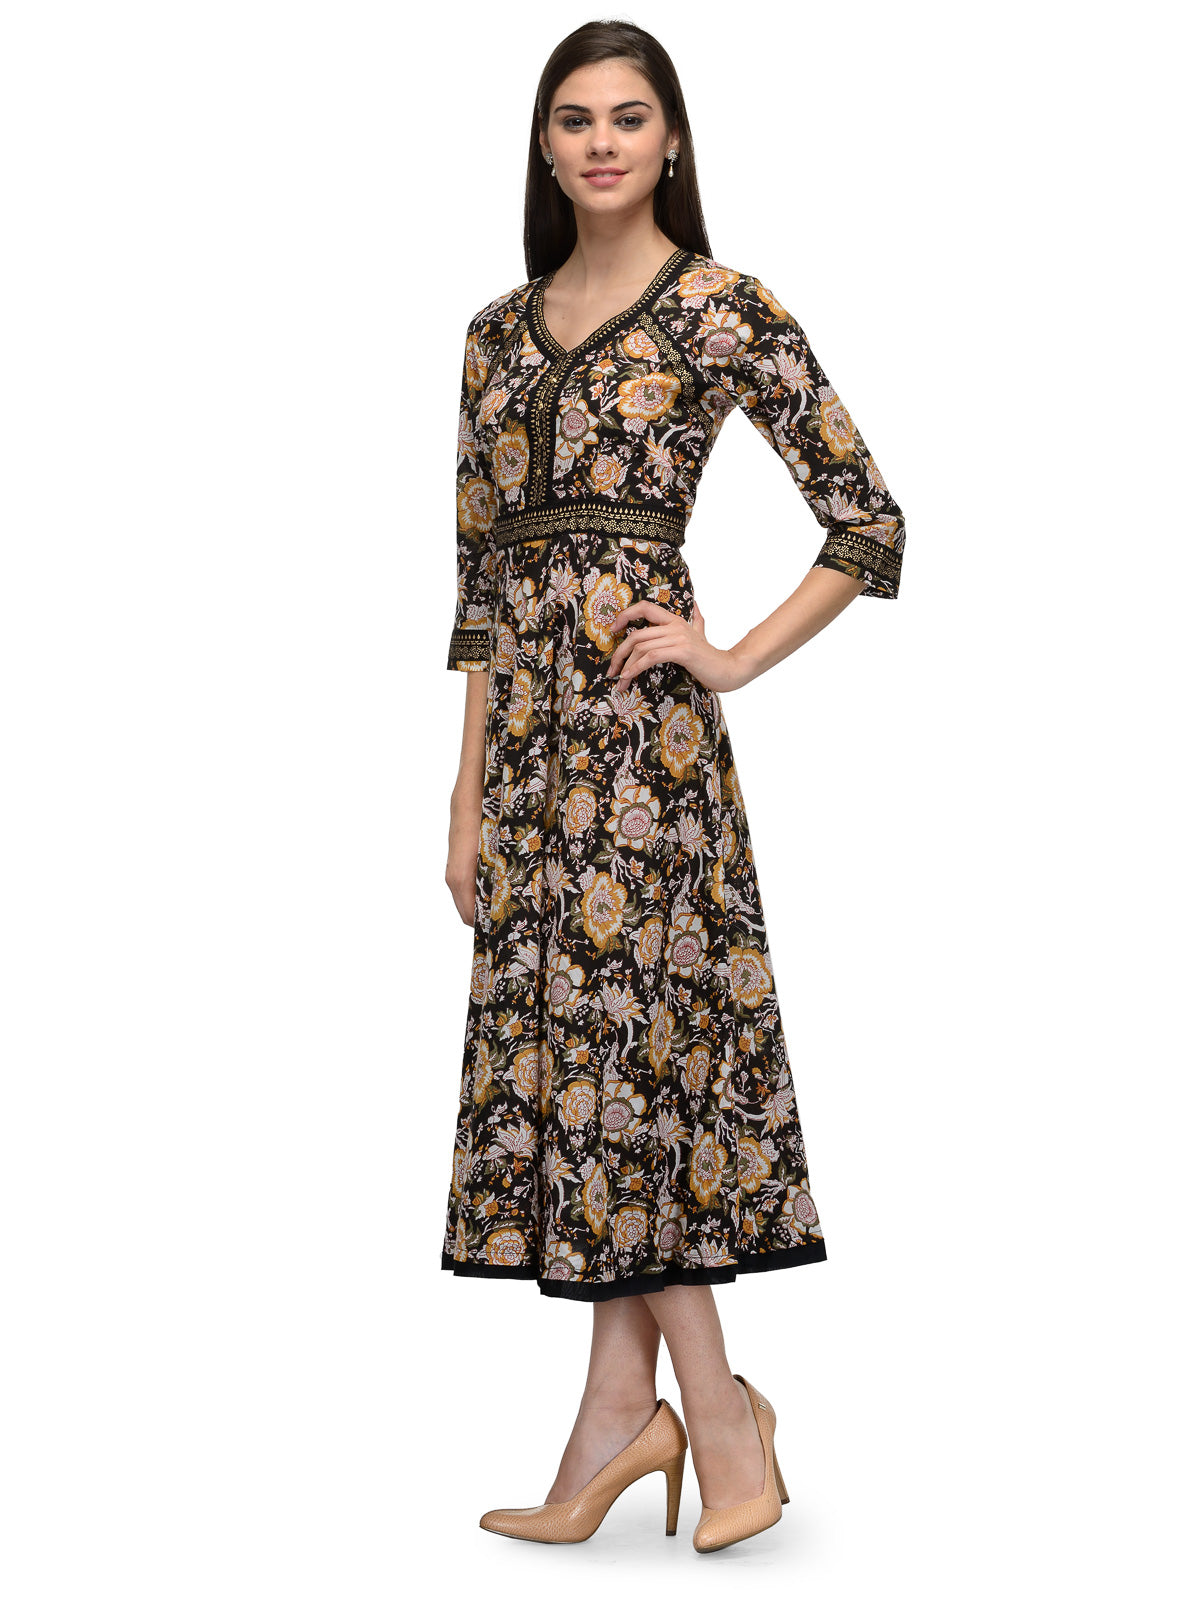 Indowestern multi color full length dress UD6006